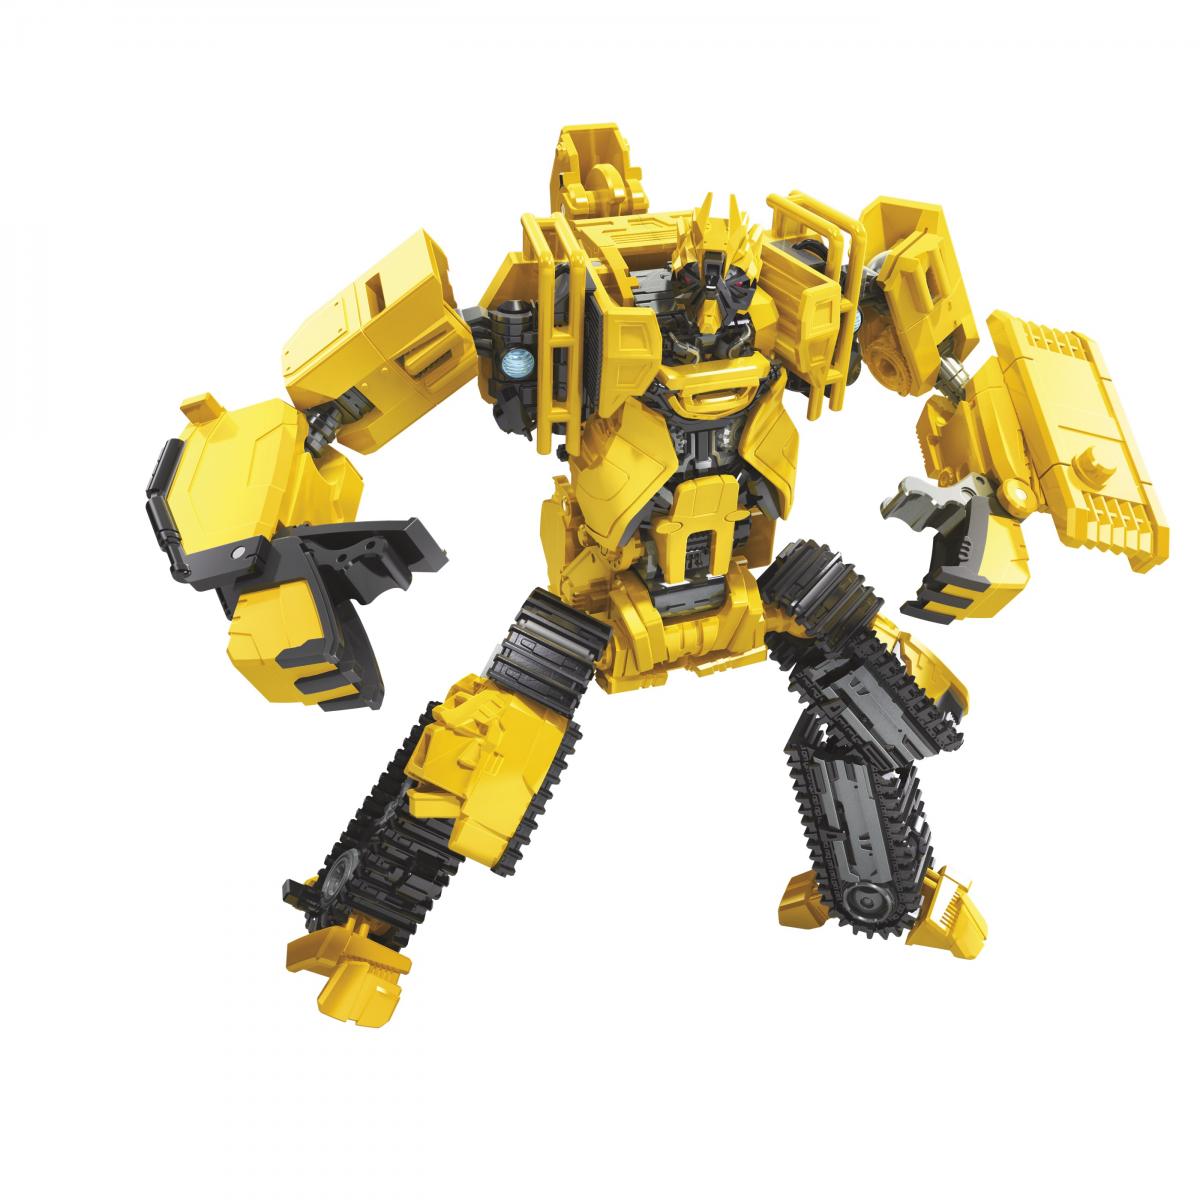 Transformers News: Studio Series Scrapmetal on Deep Discount at Amazon.com